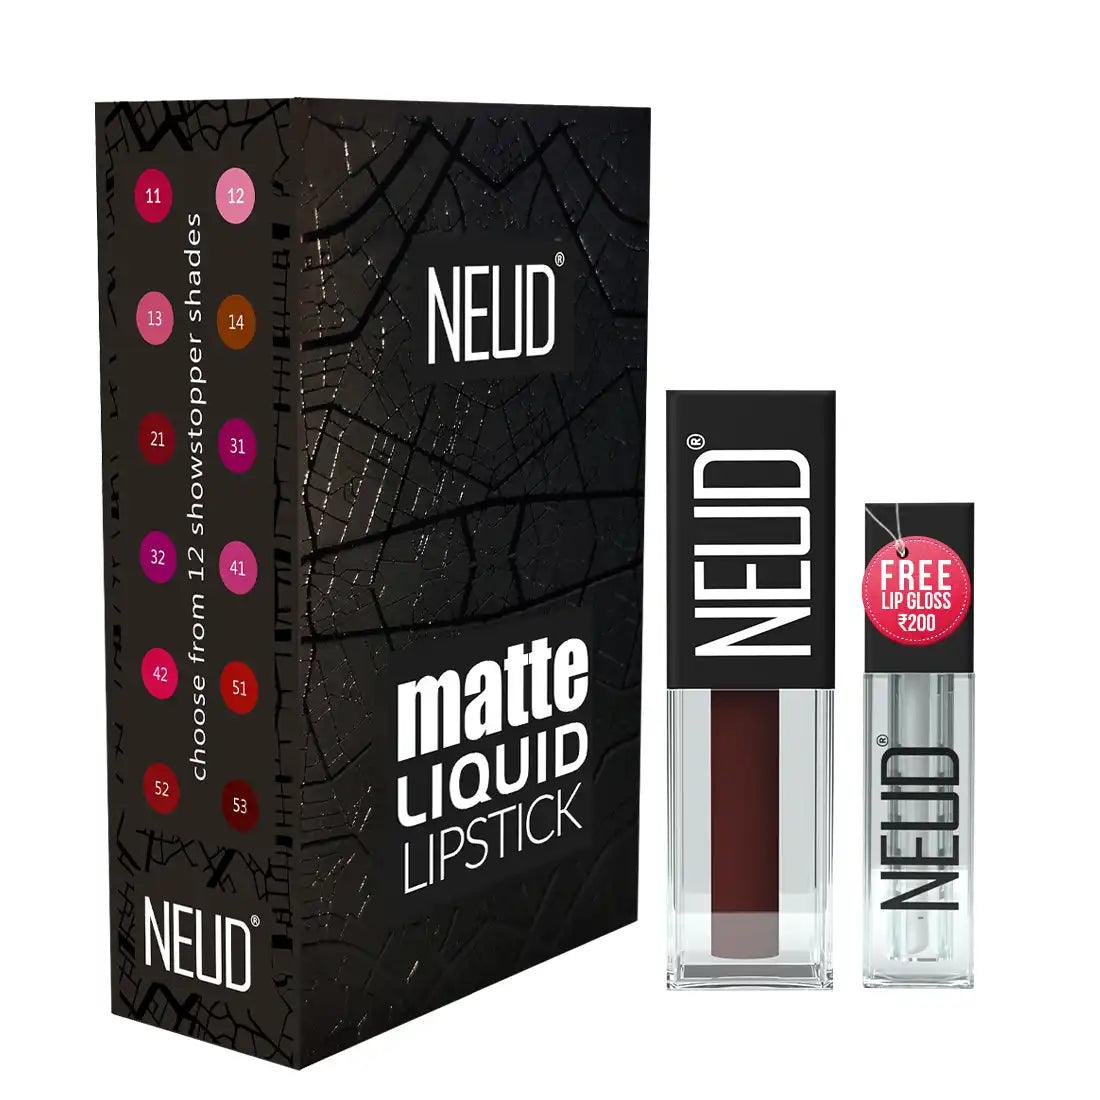 Get Free Lip Gloss Worth Rs.200 Inside Every Pack of NEUD Matte Liquid Lipstick Espresso Twist - everteen-neud.com